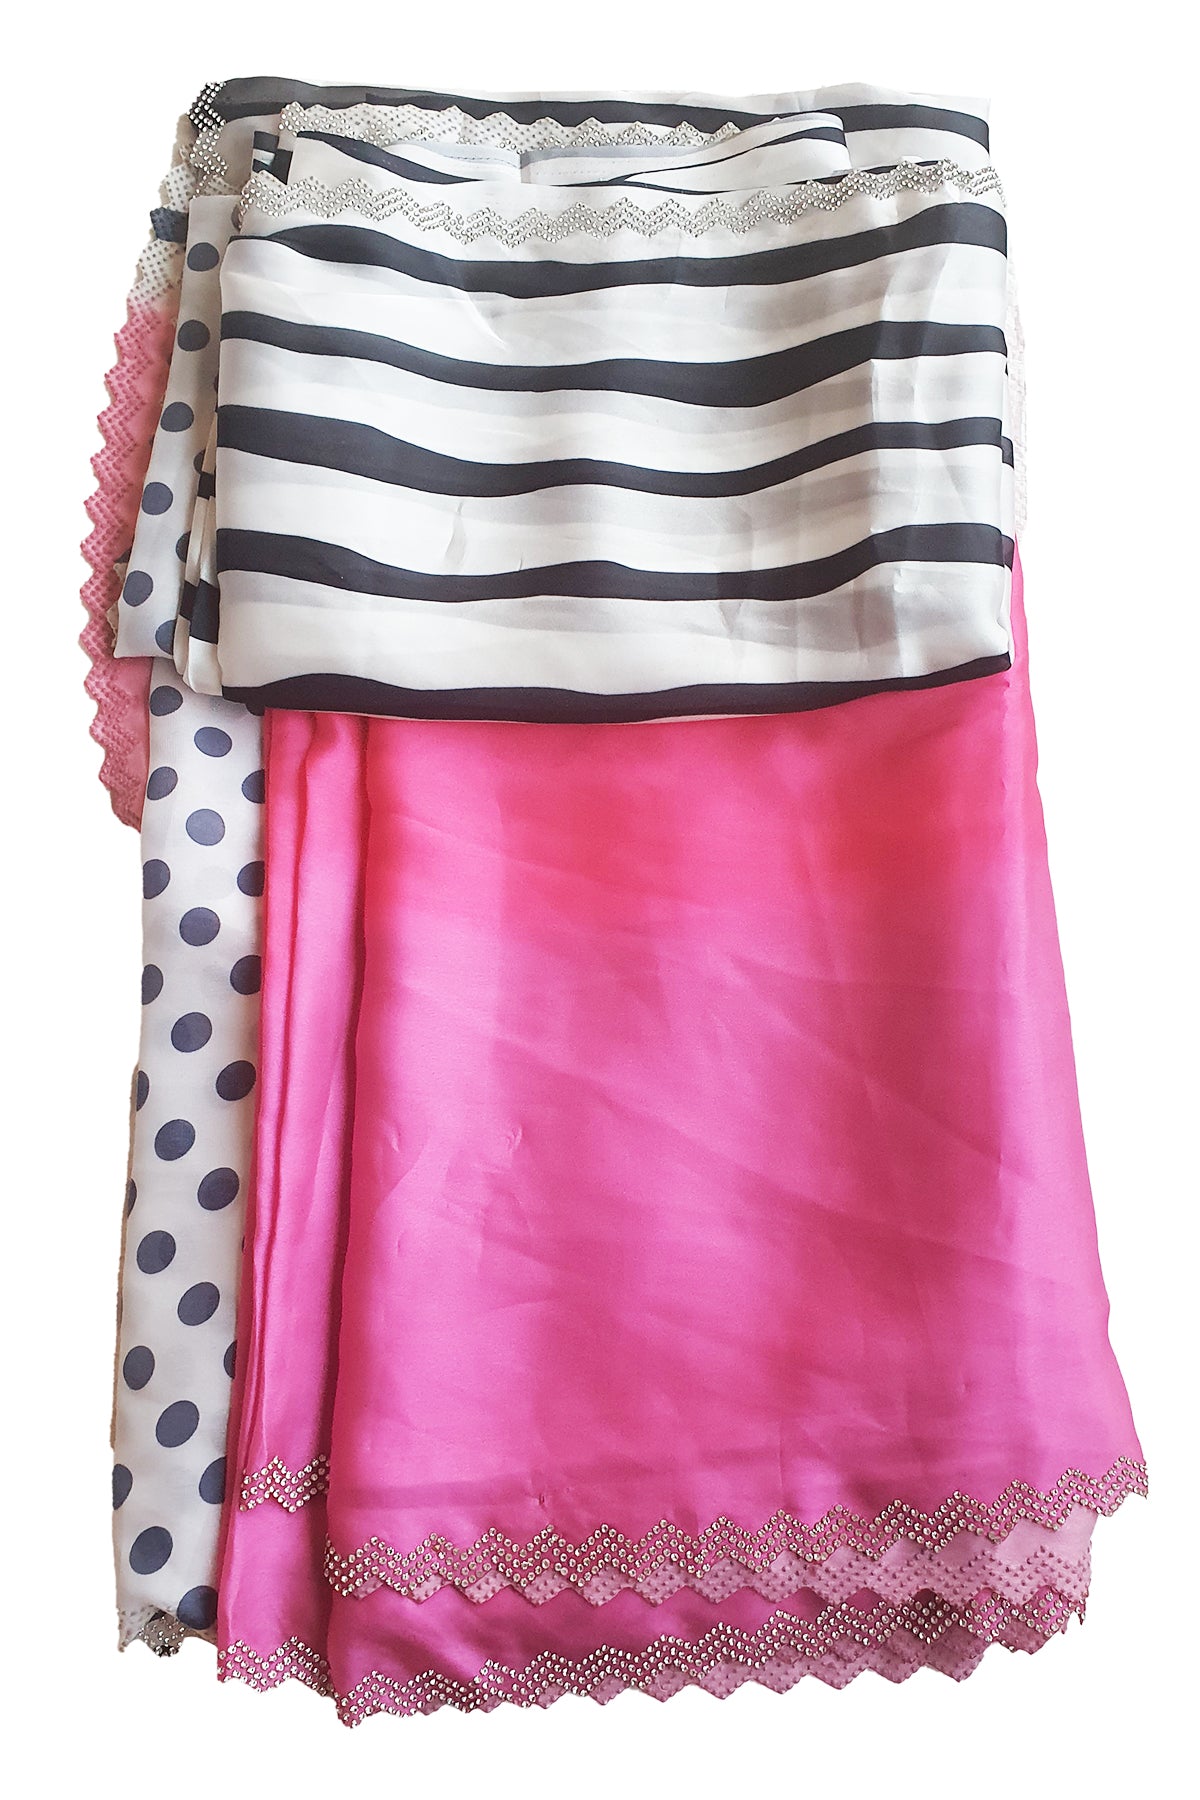 Pink White Satin Swarovski Embroidered Saree